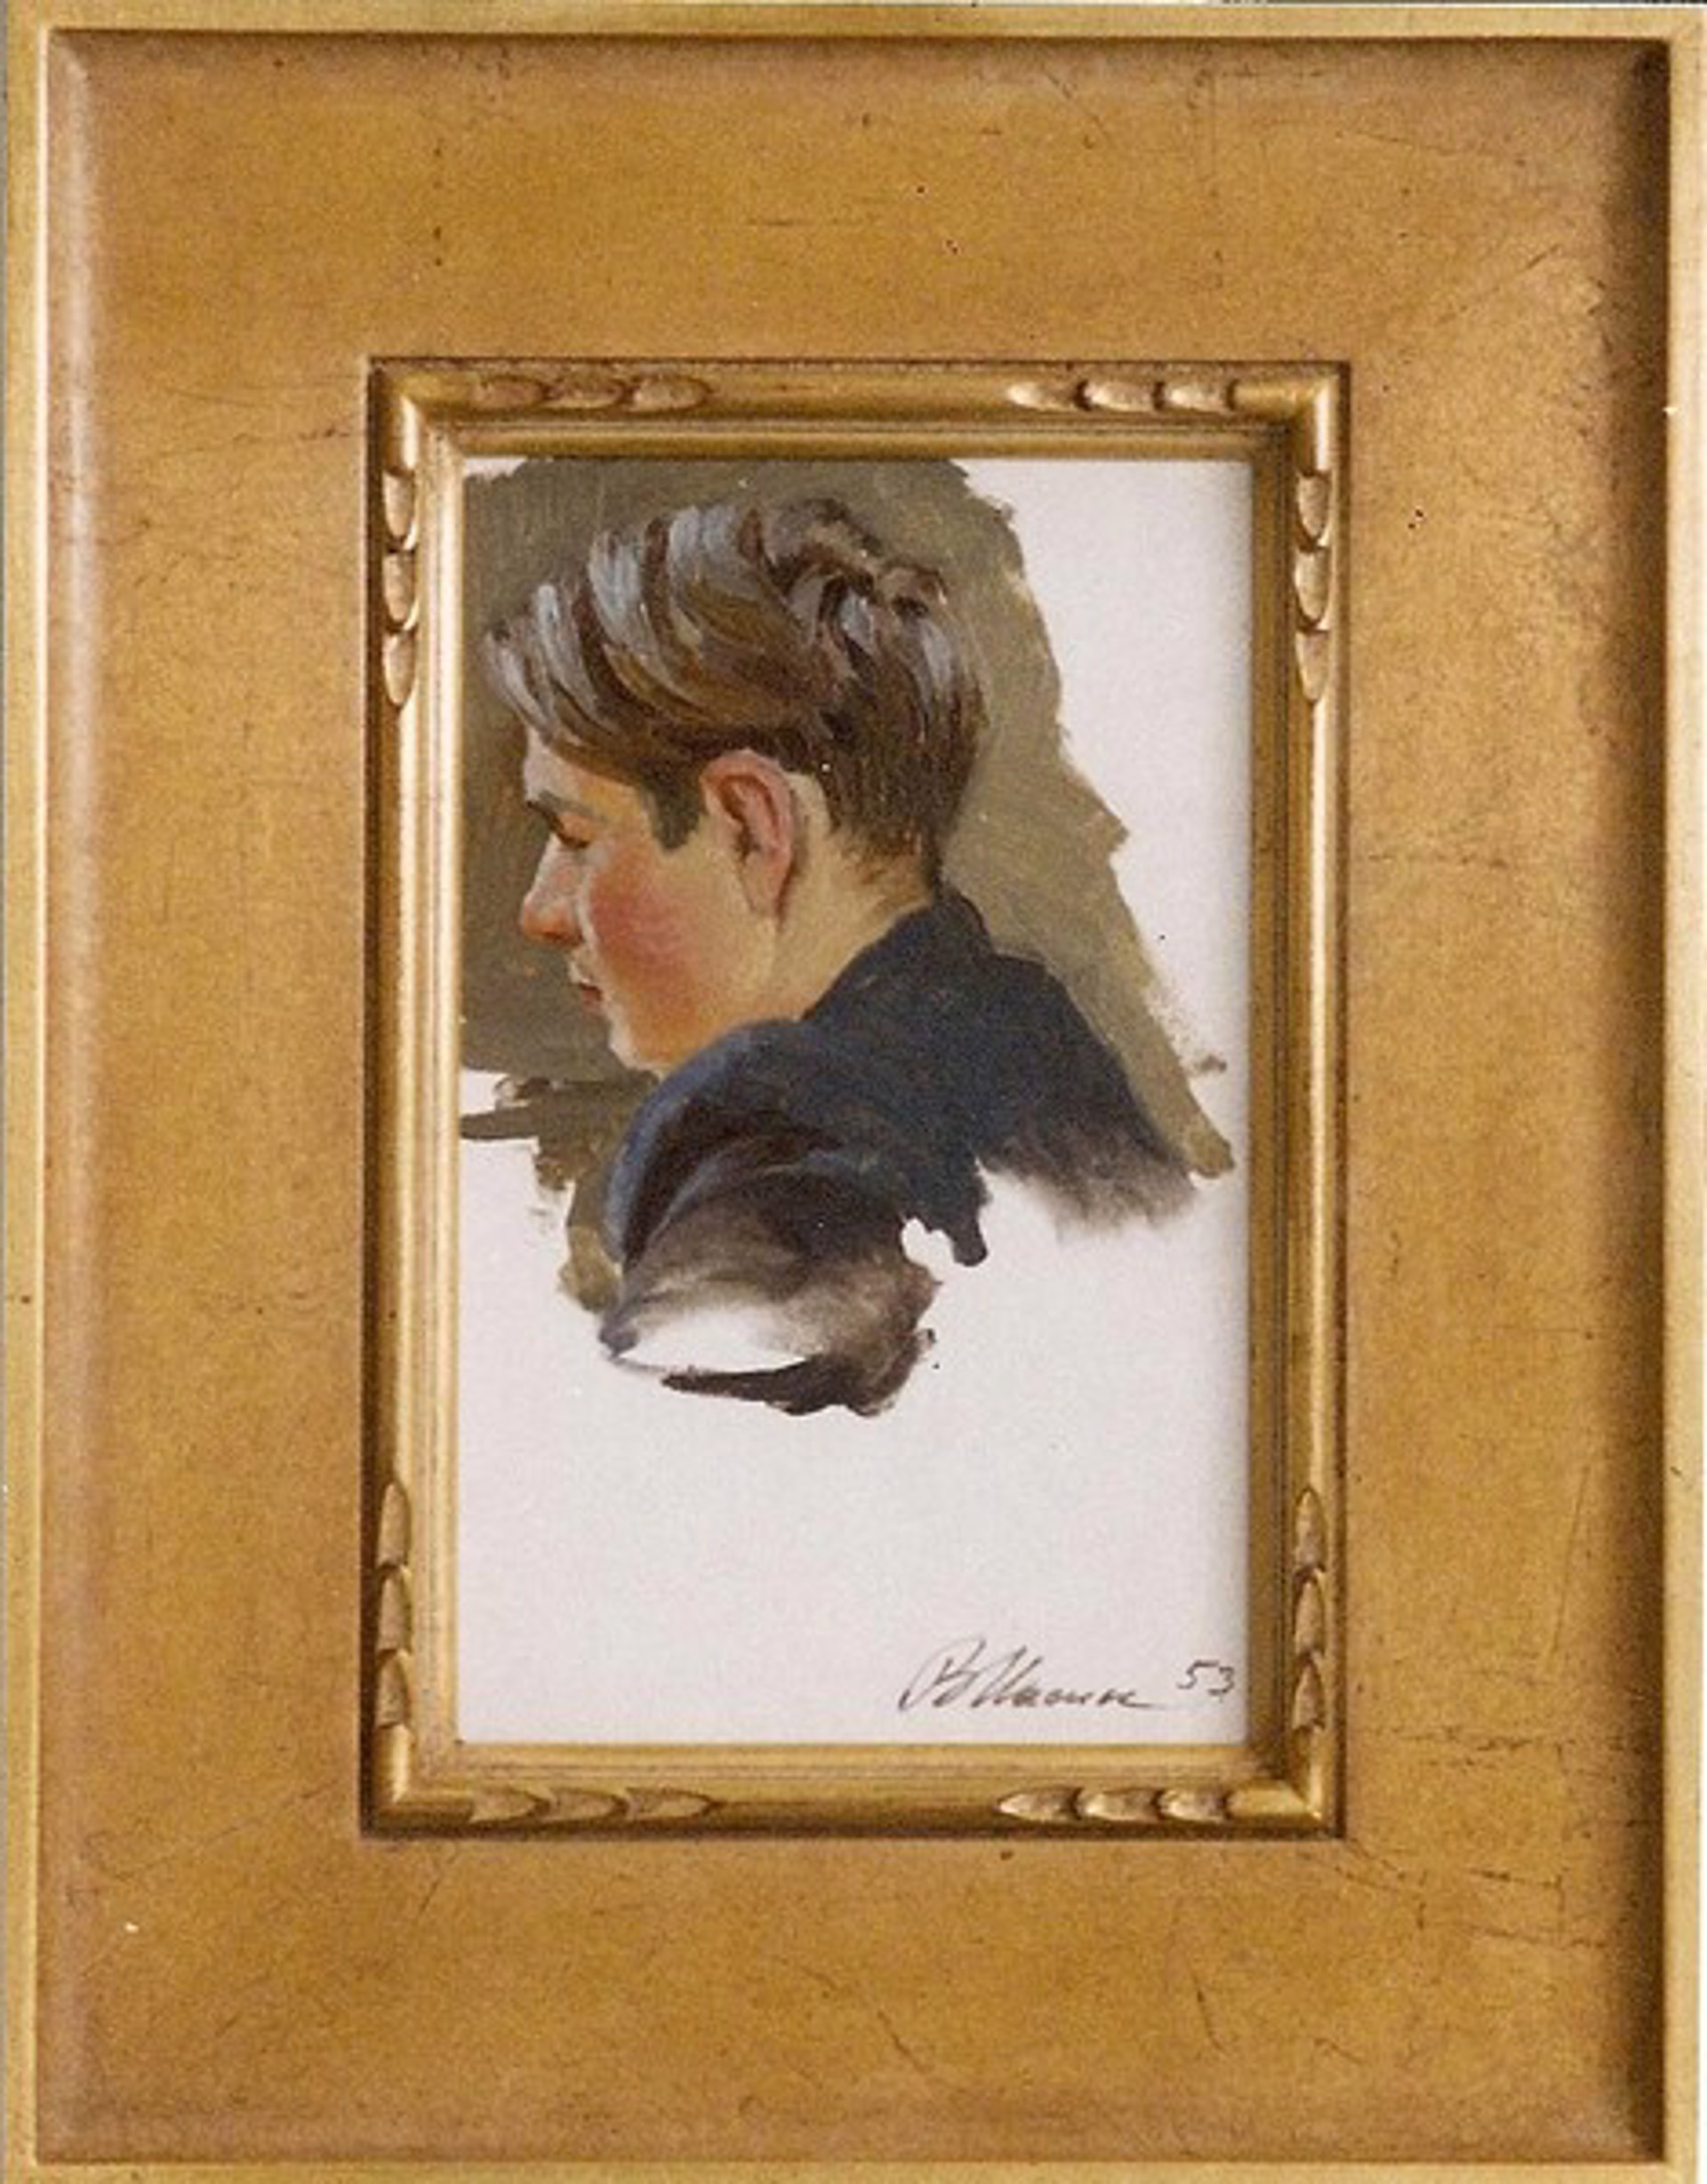 Profile of a Boy - Study by Vladimir Masik